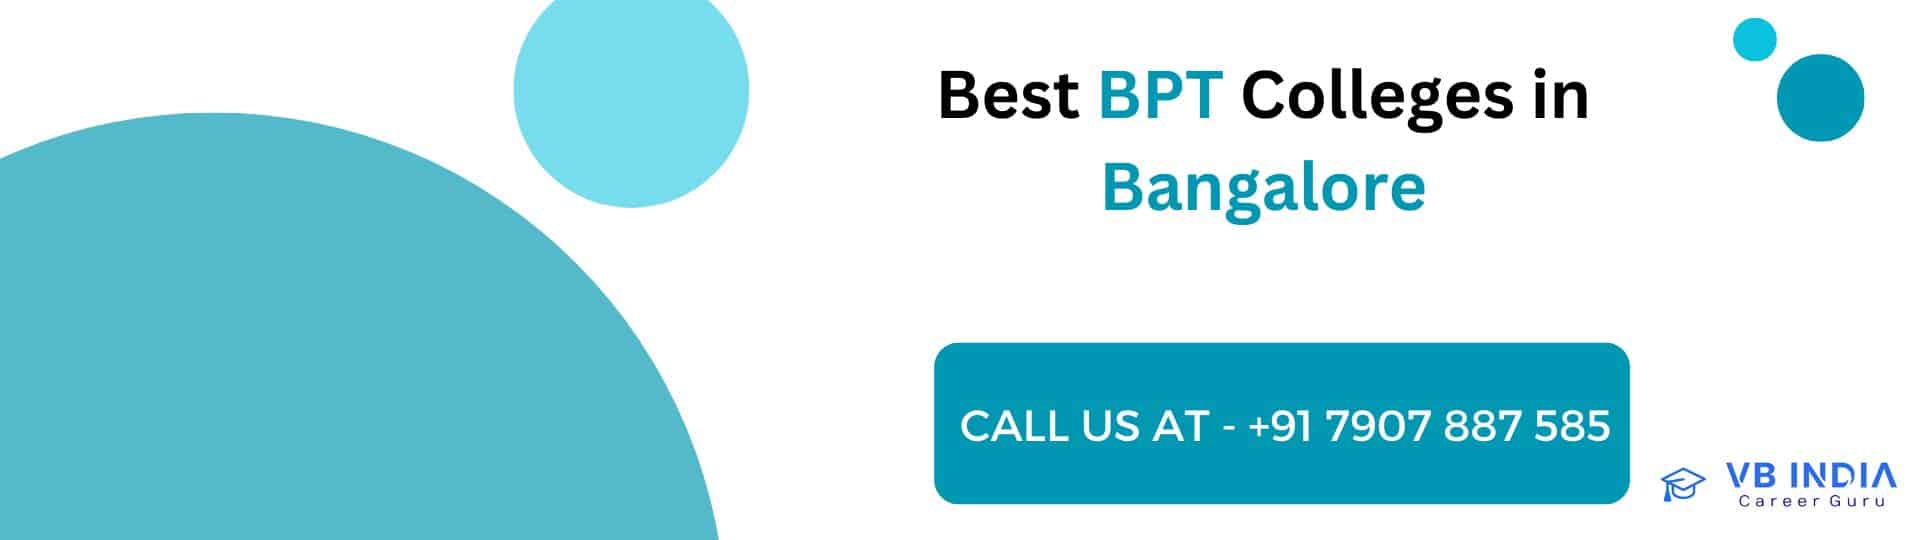 Bpt Colleges in Bangalore